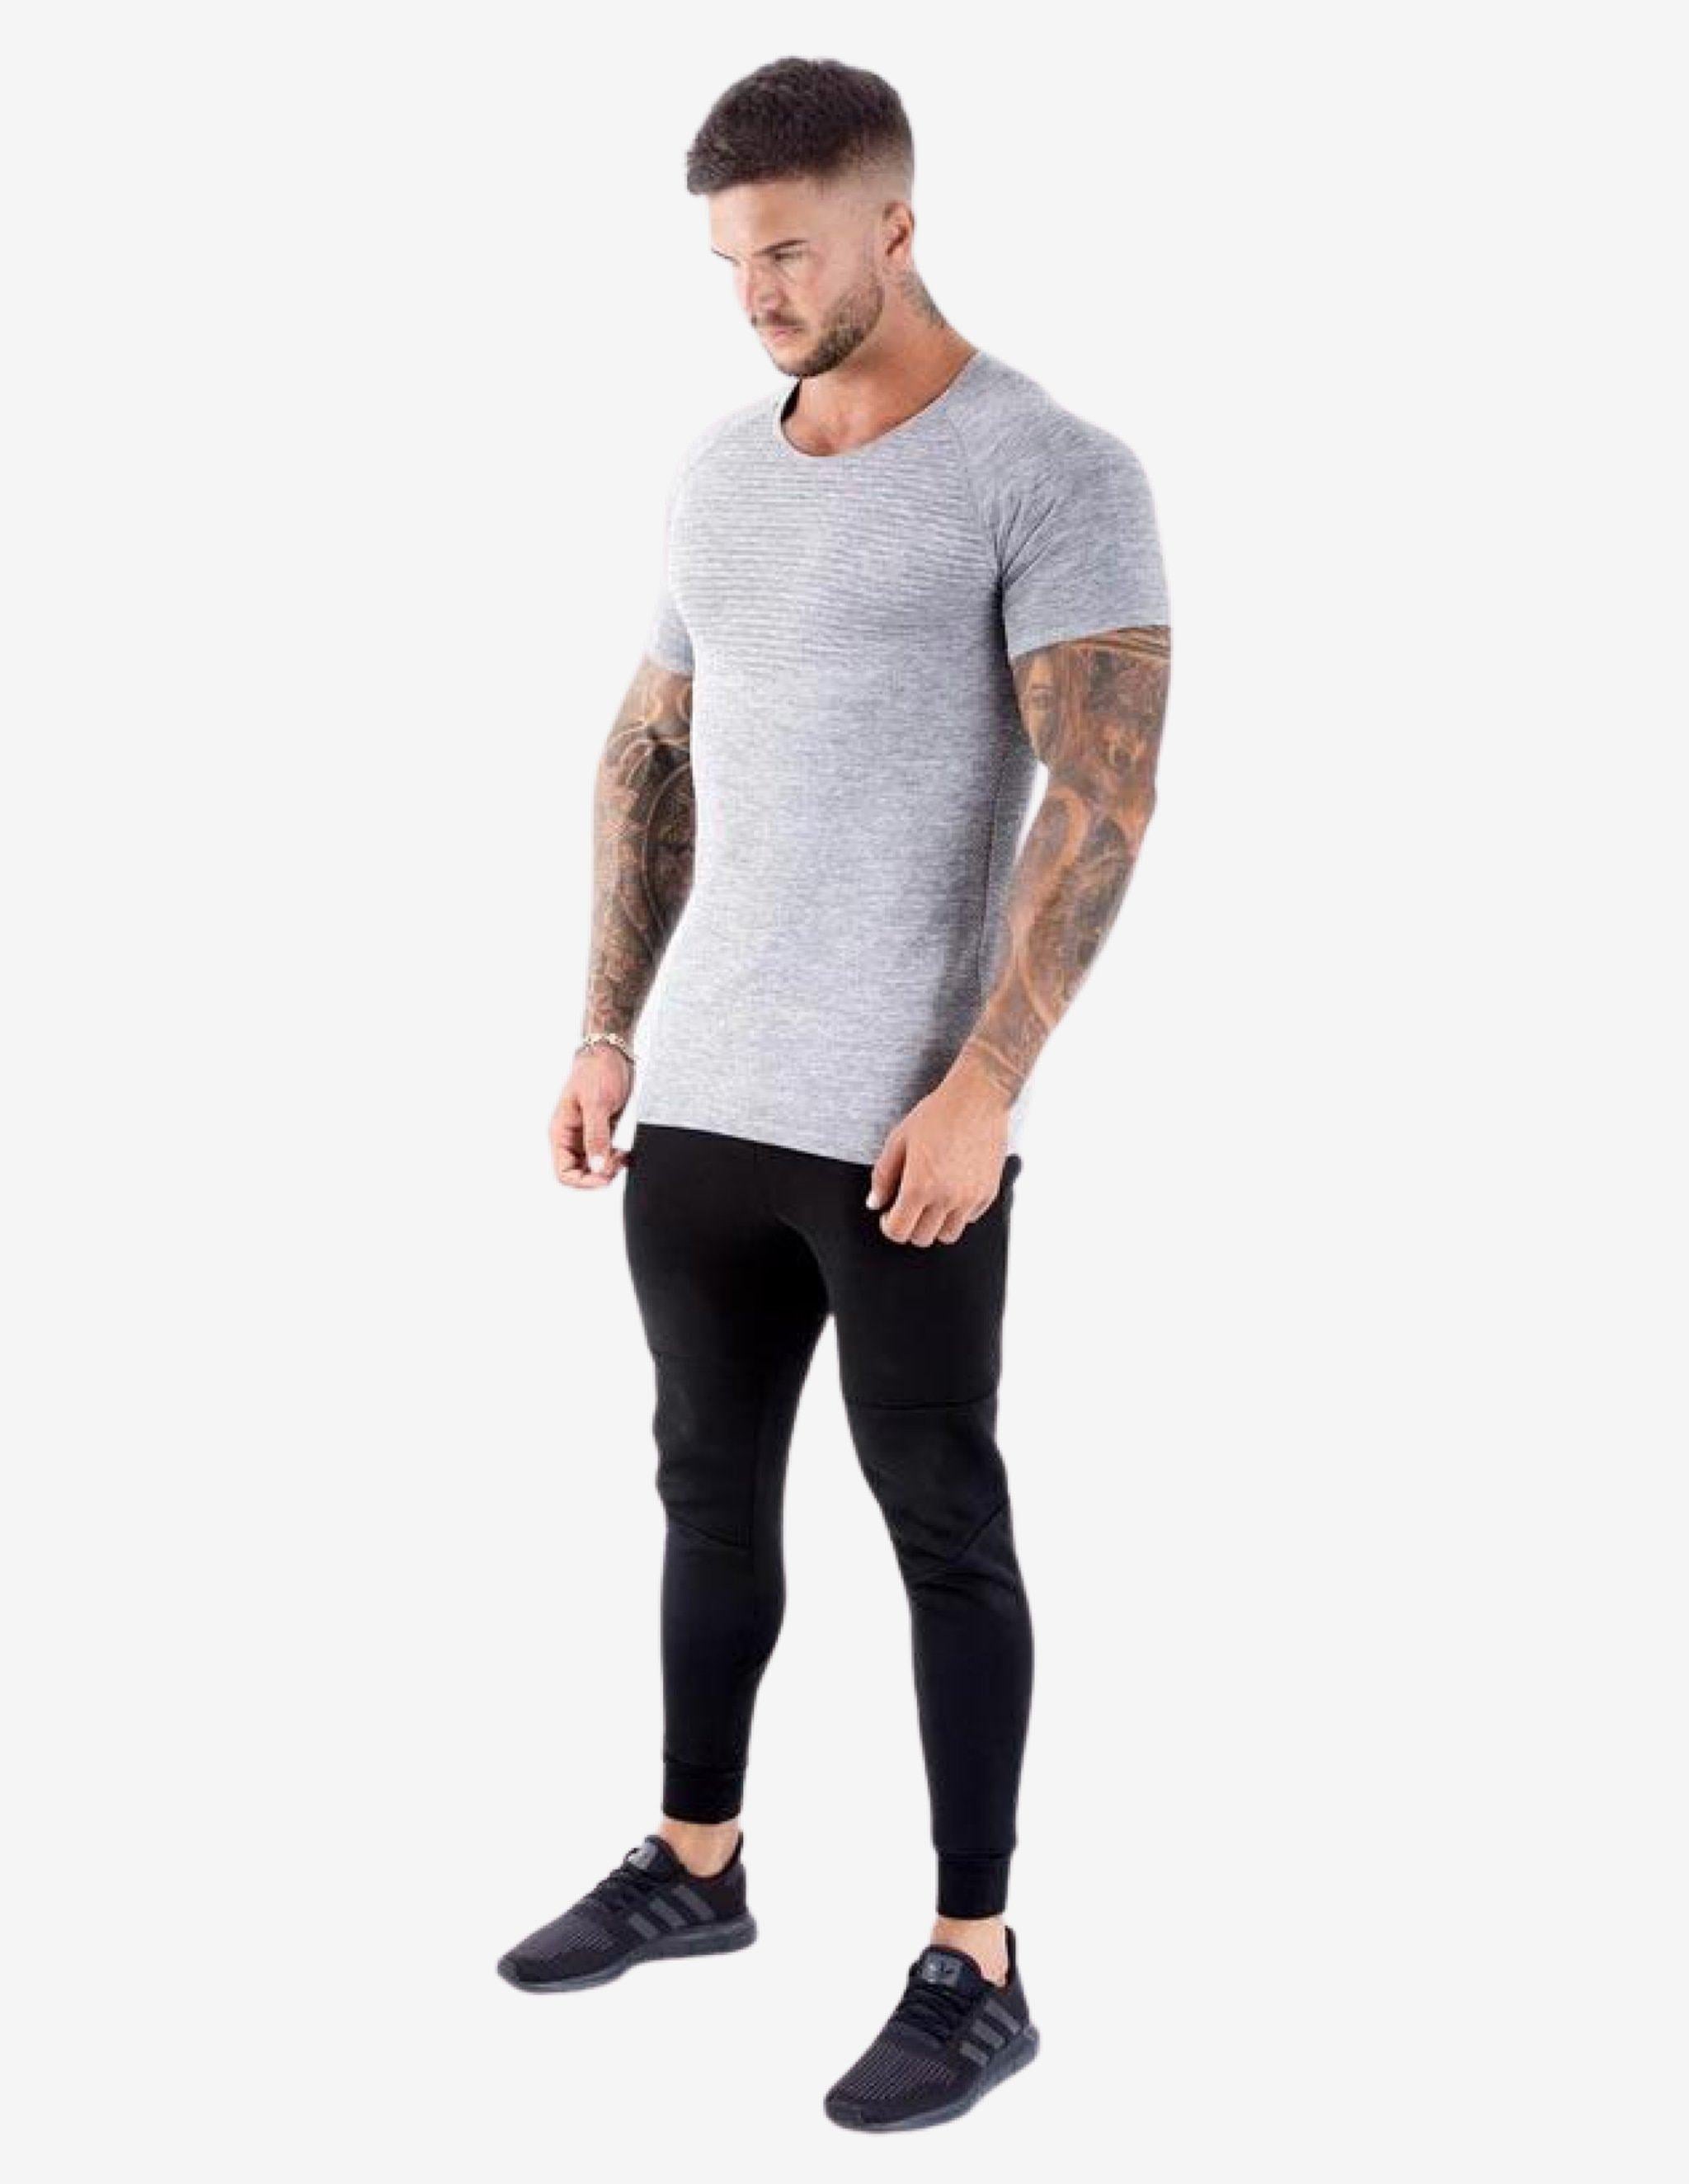 Seamless Knit Shirt - Slate-T-shirt Man-Biink Athleisure-Guru Muscle